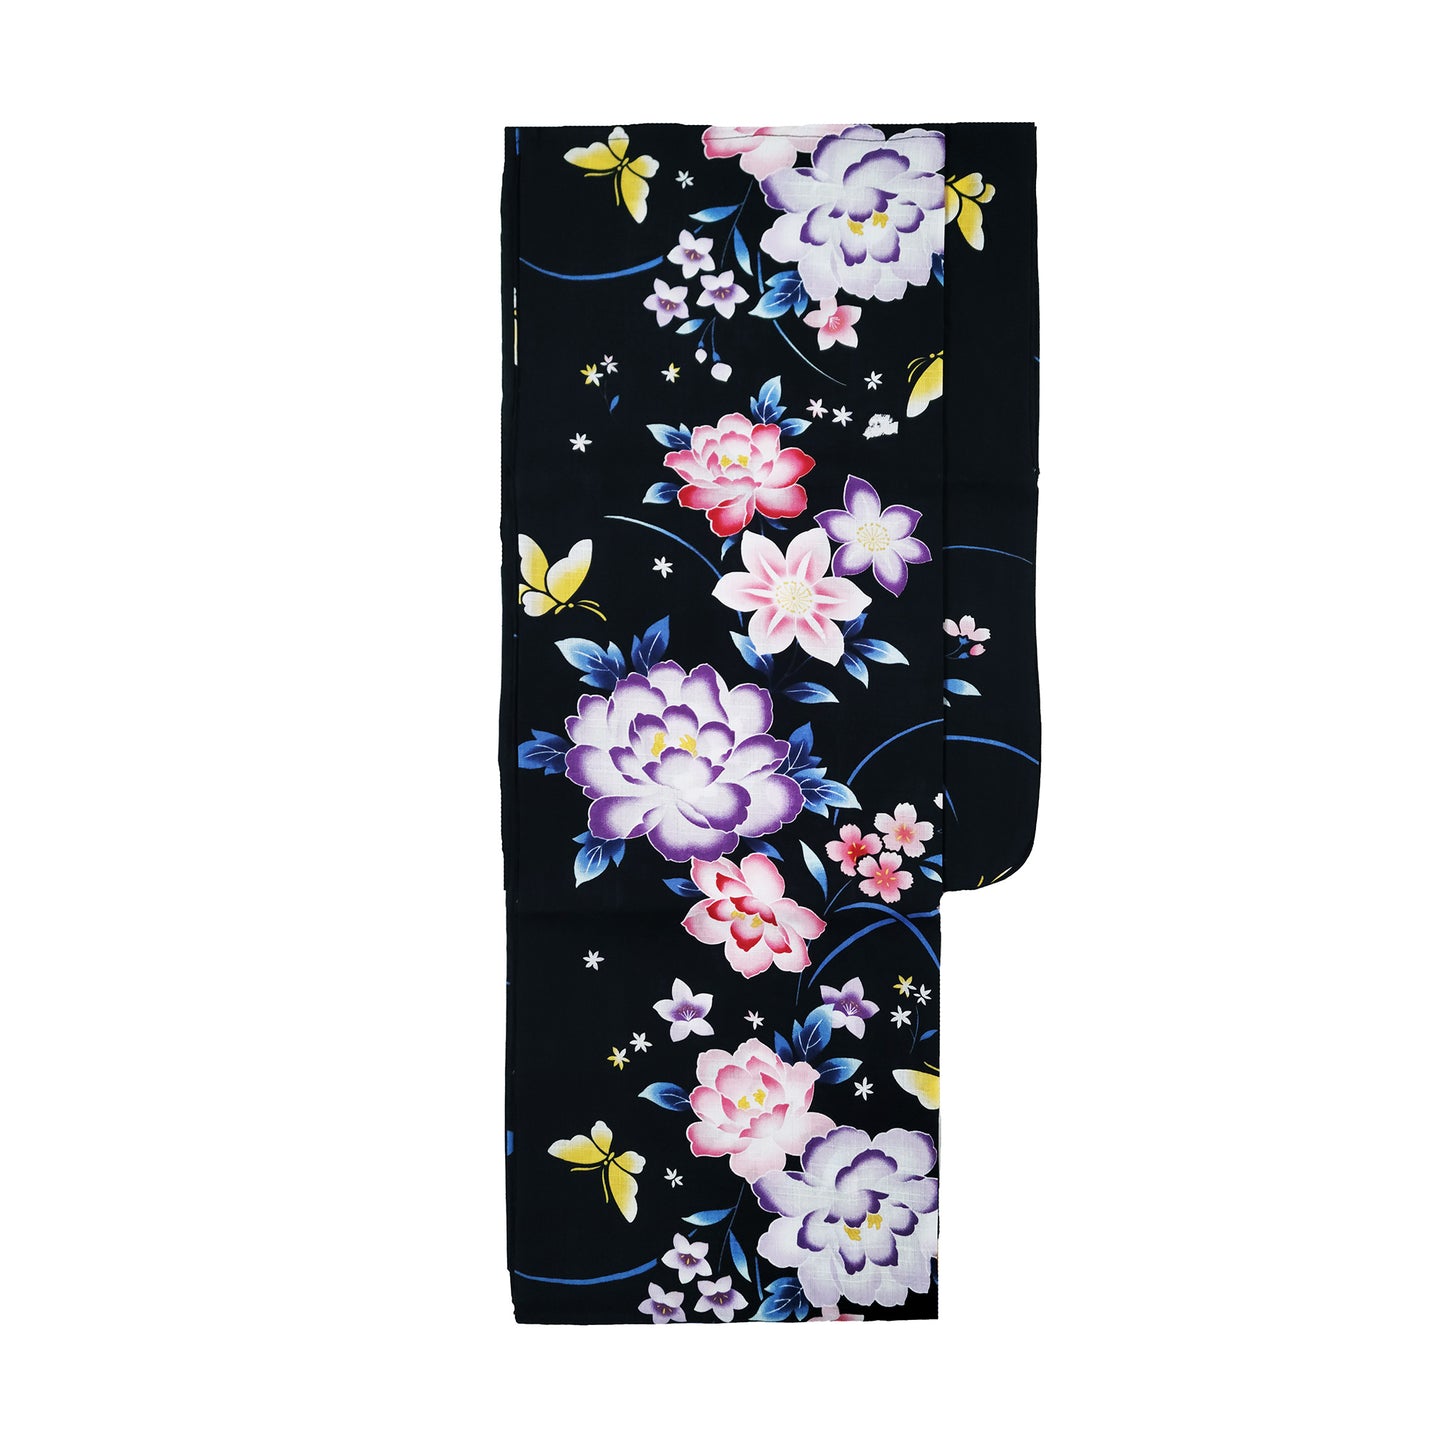 Women's Japanese Yukata Kimono Petite Size - Peonies and Butterflies in Black